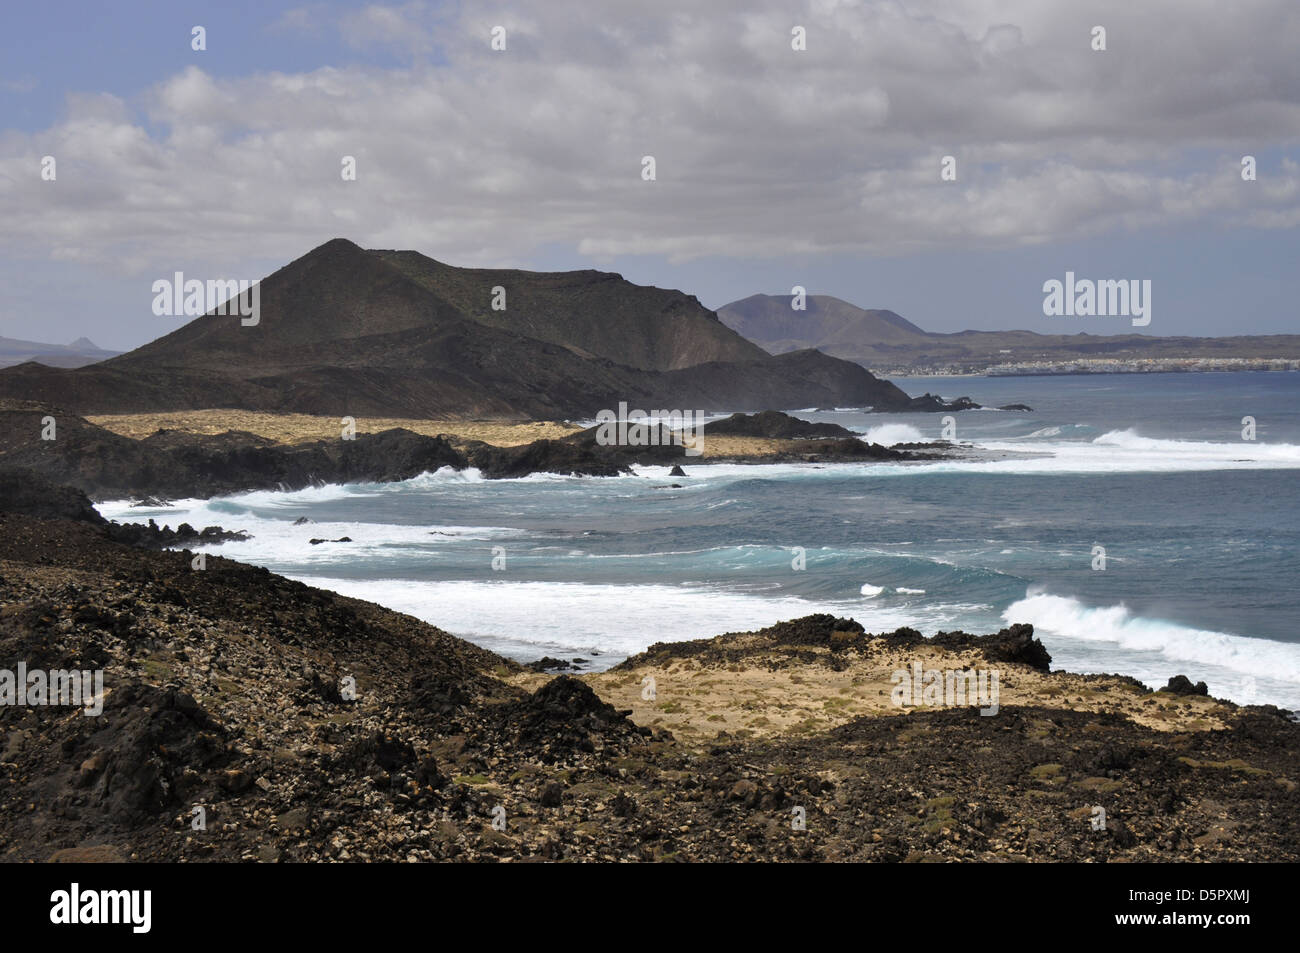 Wild ocean on the vulcanic island of Fuerteventura Stock Photo